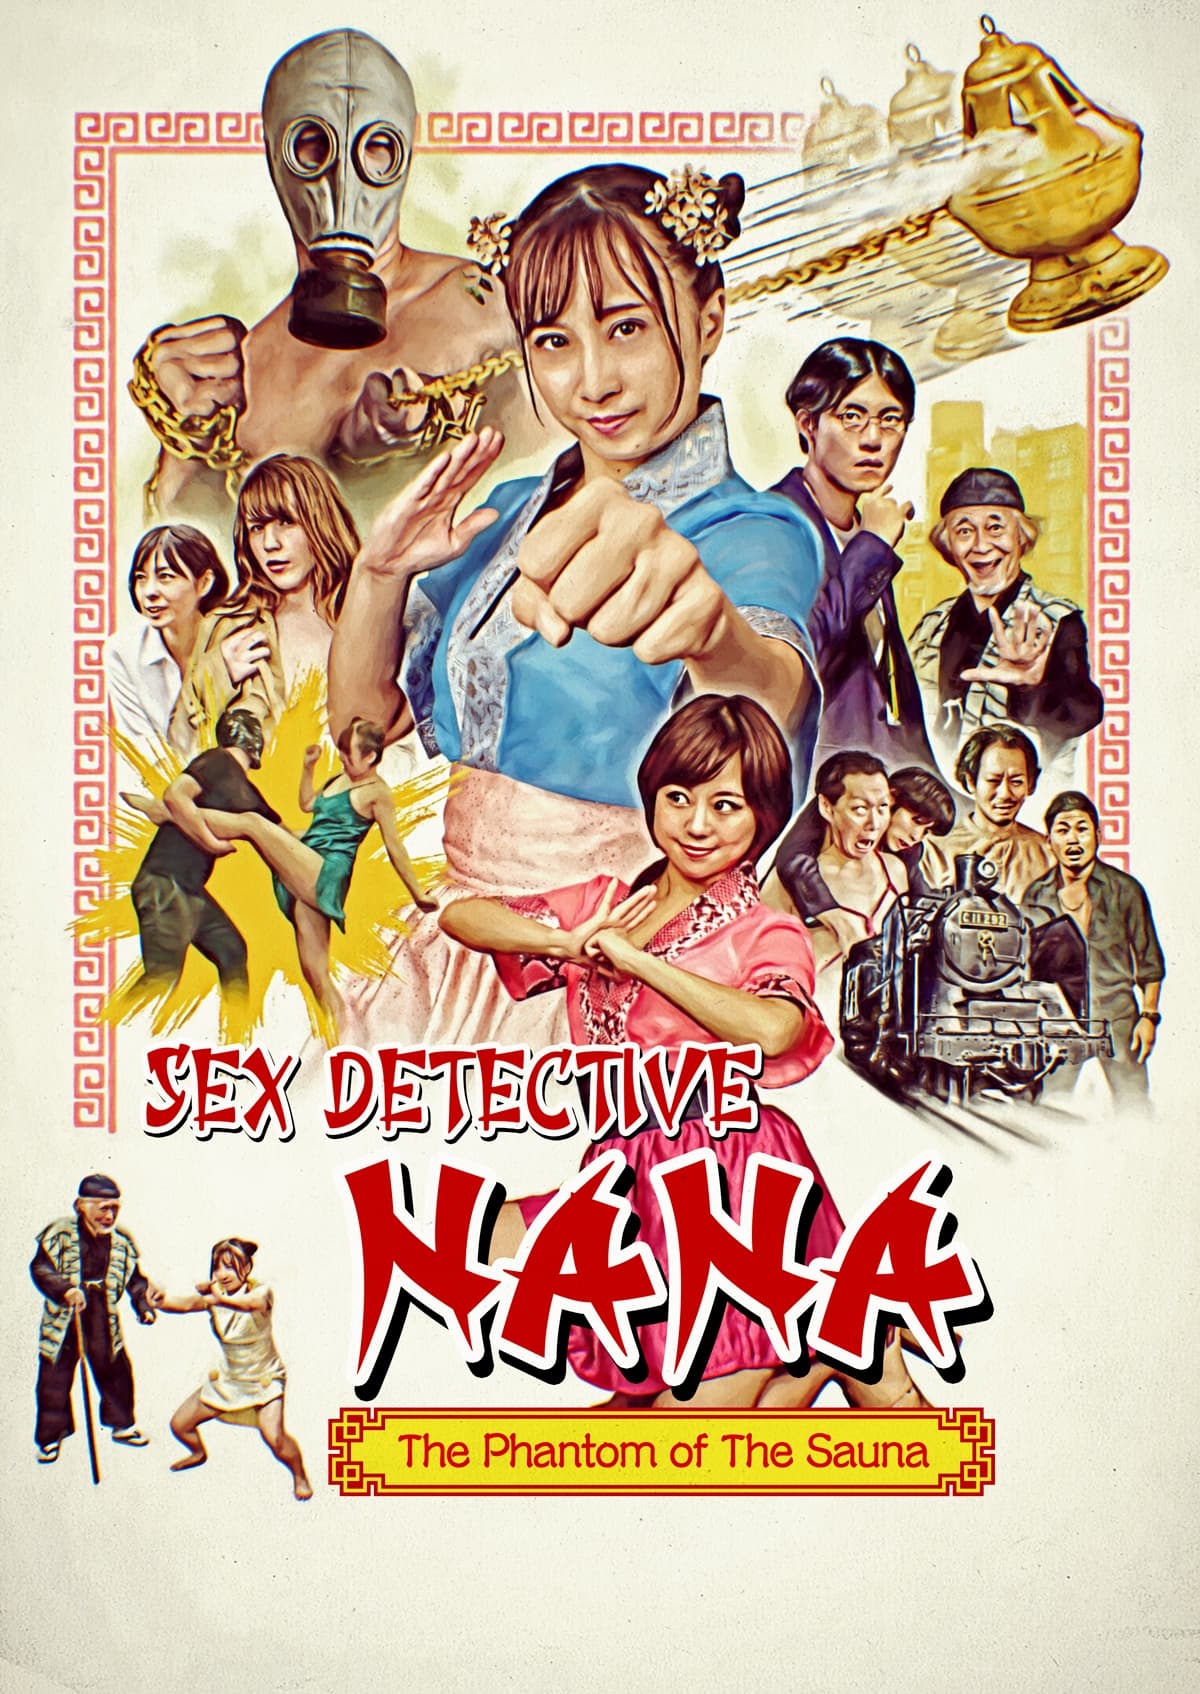 Sex Detective Nana: The Phantom of the Sauna